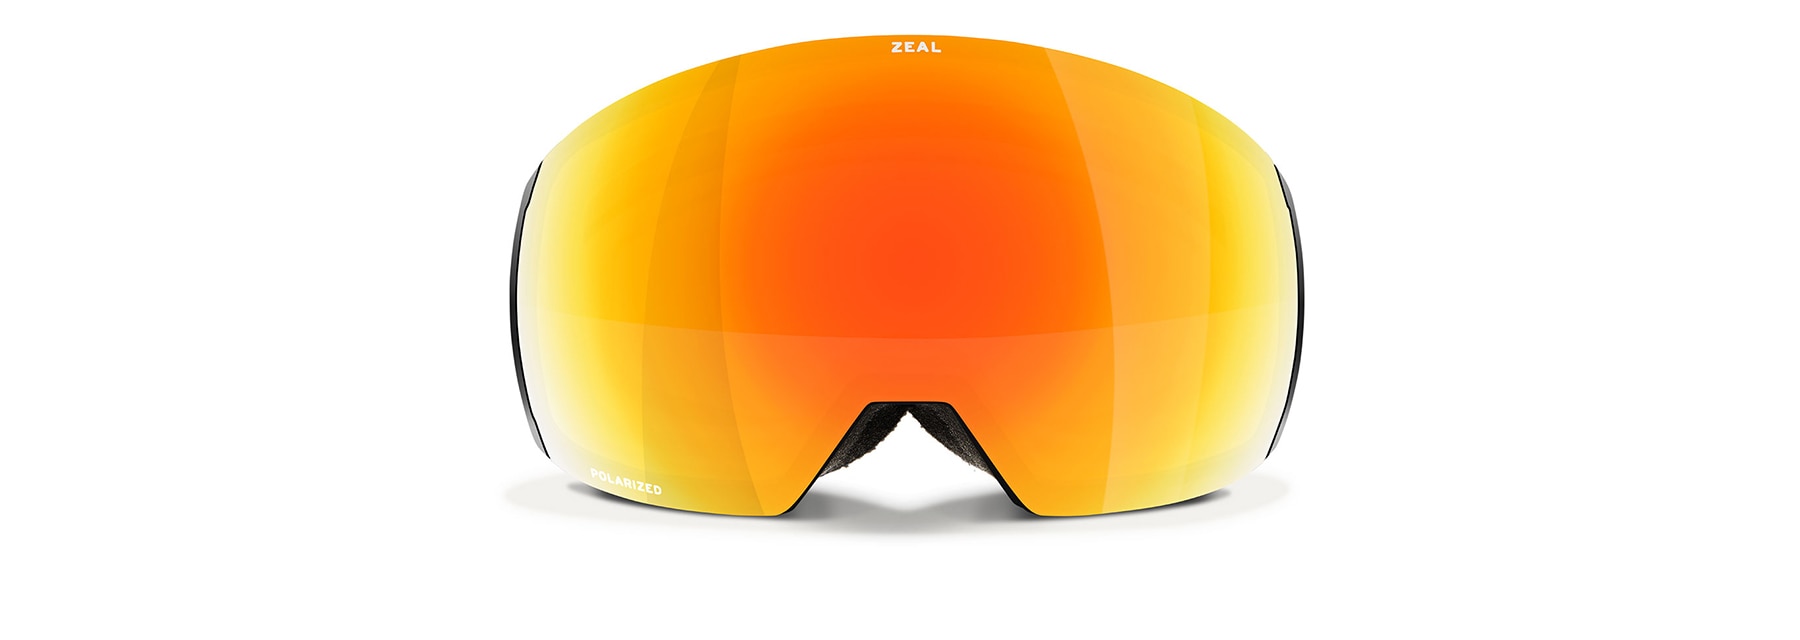 OTG Ready Frameless Ski & Snowboard Goggles for Men & Women Zeal Optics Portal XL 